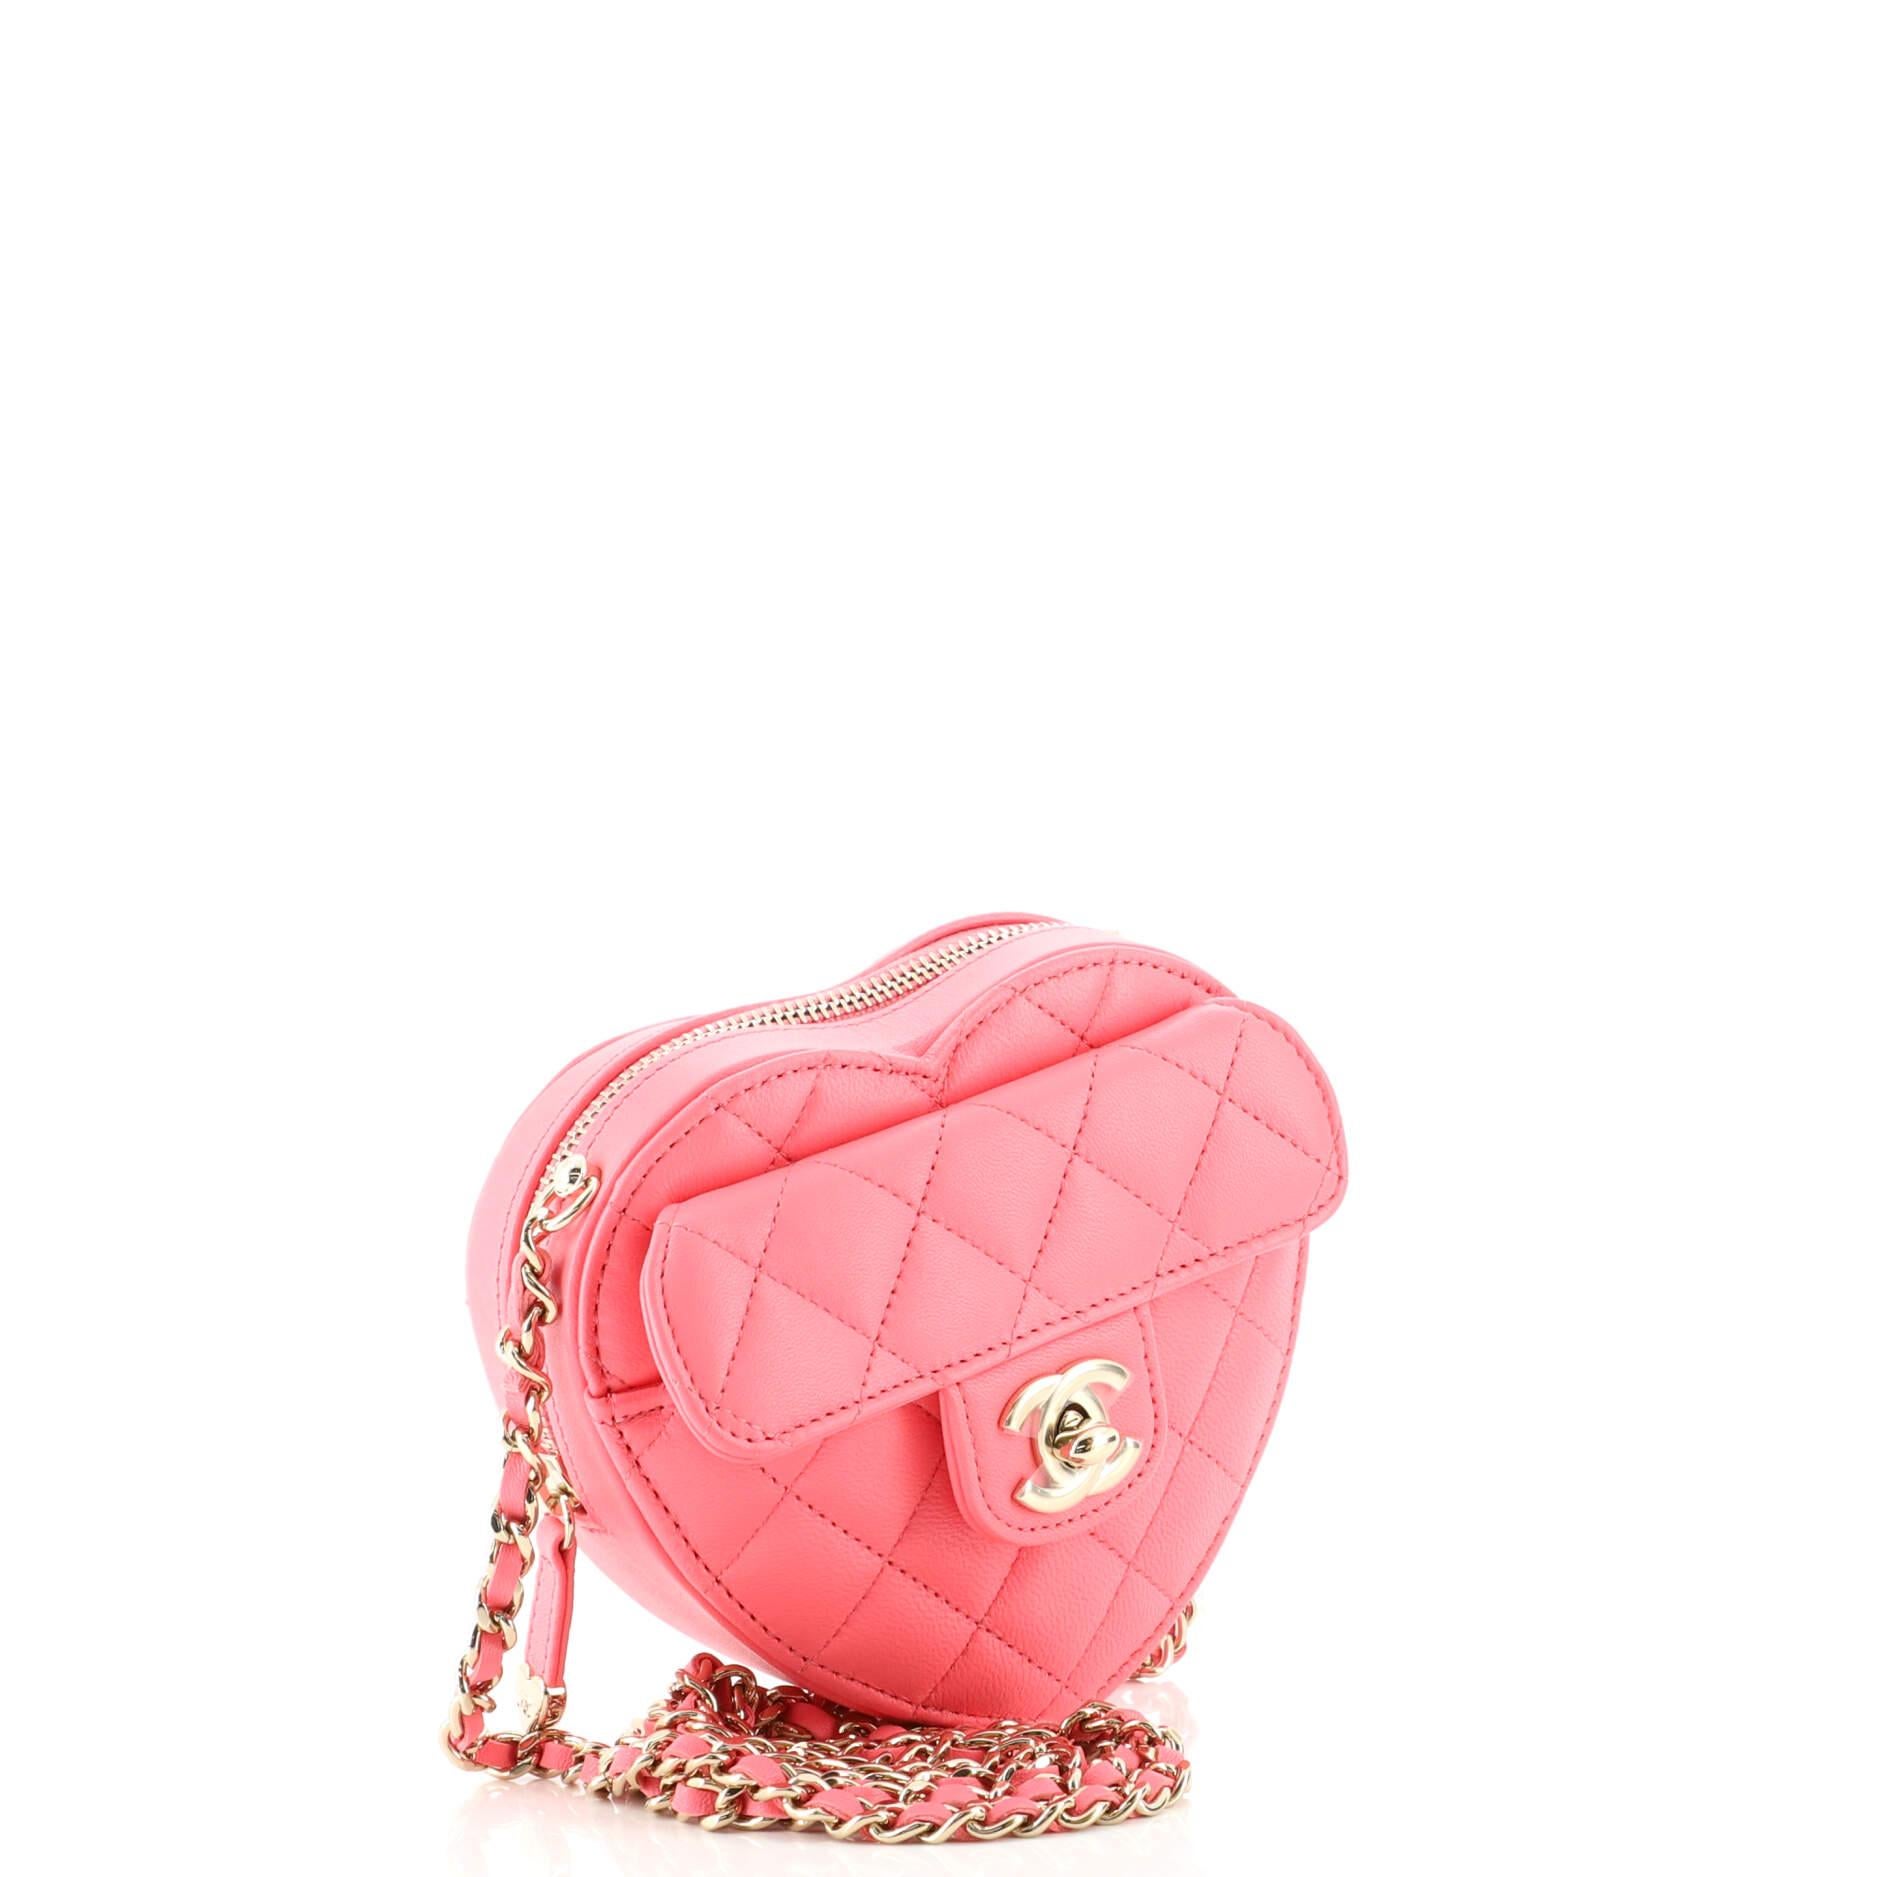 pink chanel heart bag